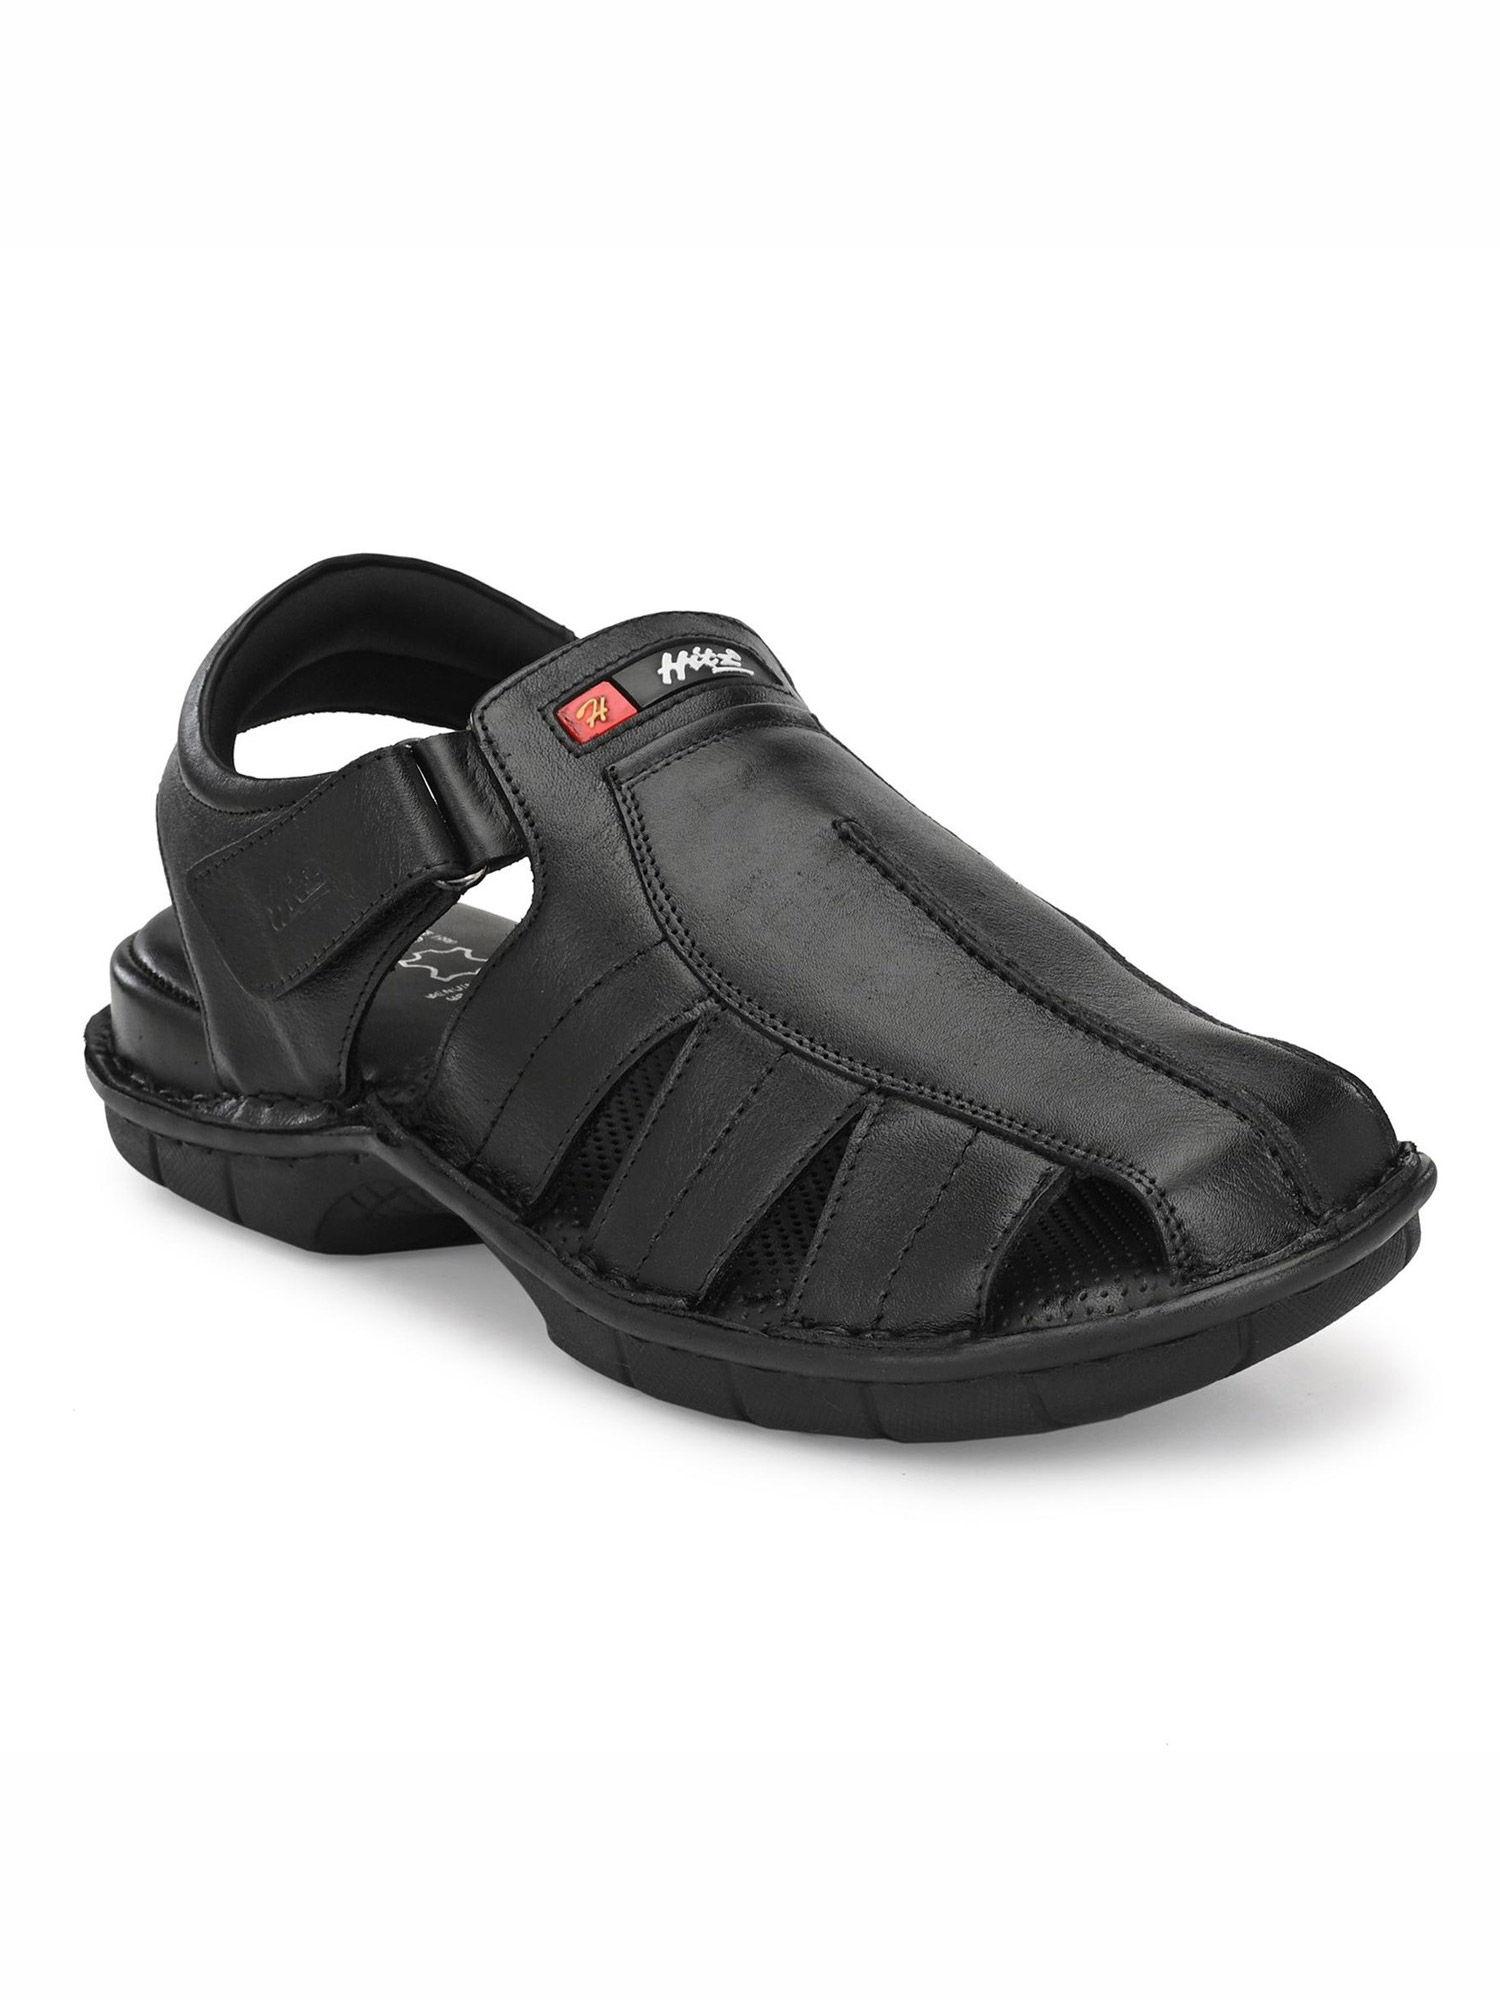 men's black leather comfort sandals with velcro closure